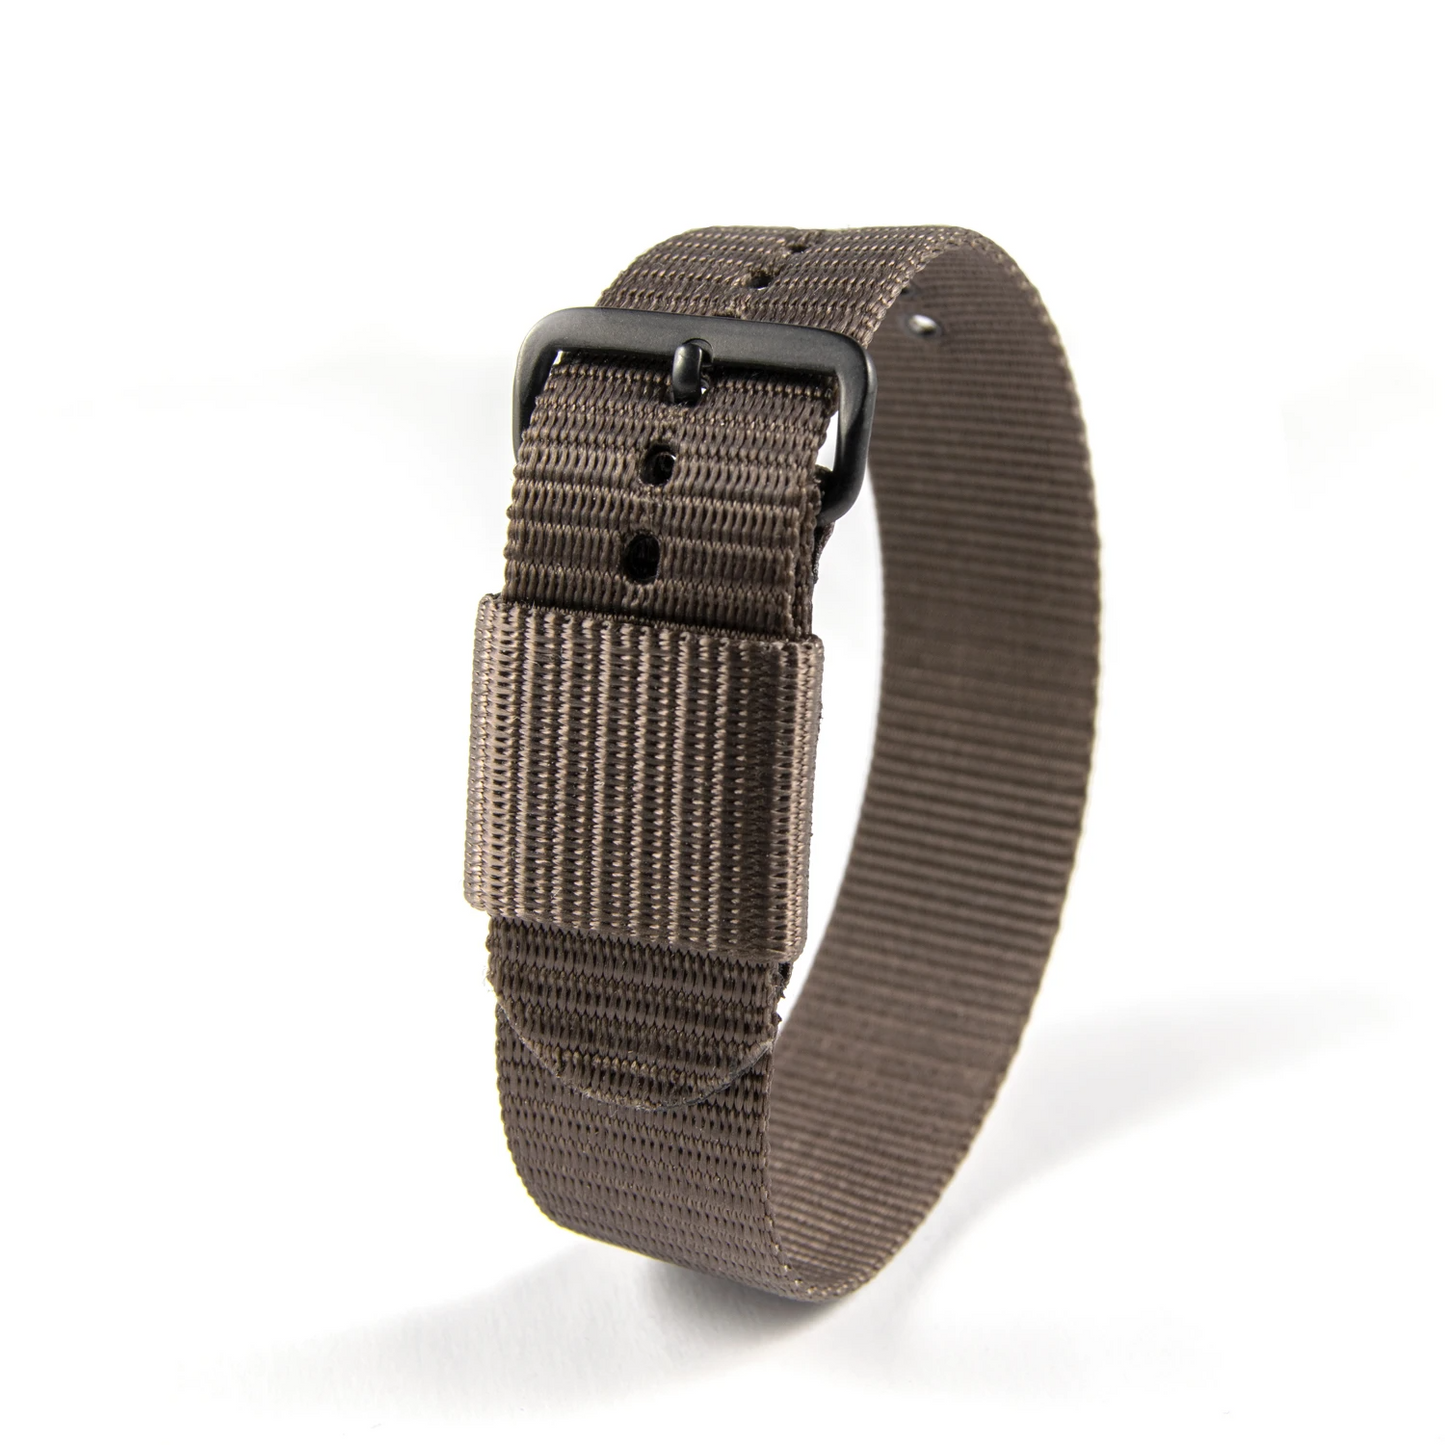 Marathon 20mm Ballistic Nylon Watch Band/Strap with Stainless Steel Buckle